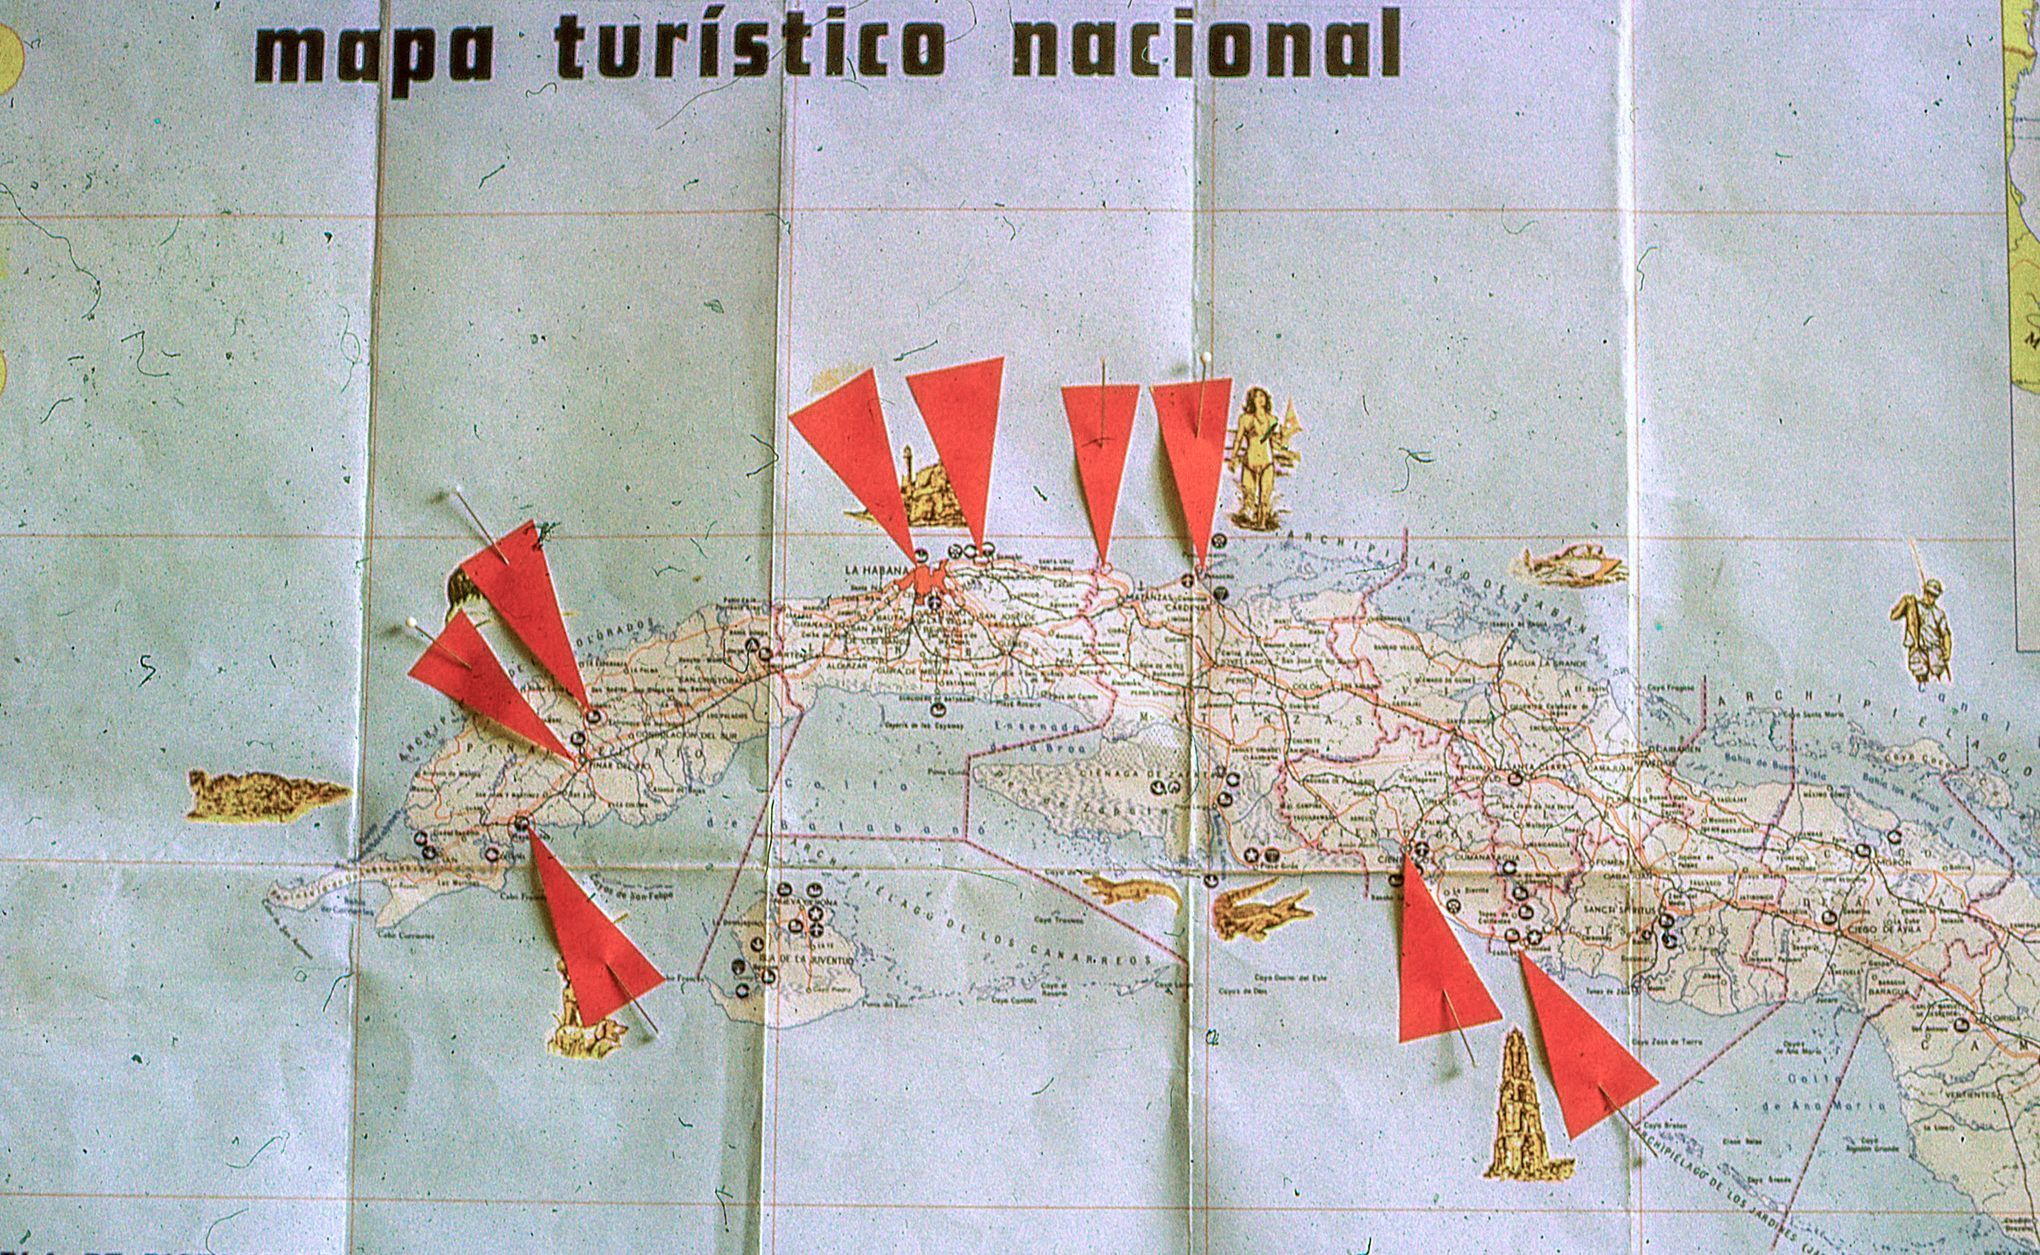 Kuba, rok 1989, Petr Levinský, Zahraničí, vol. 1